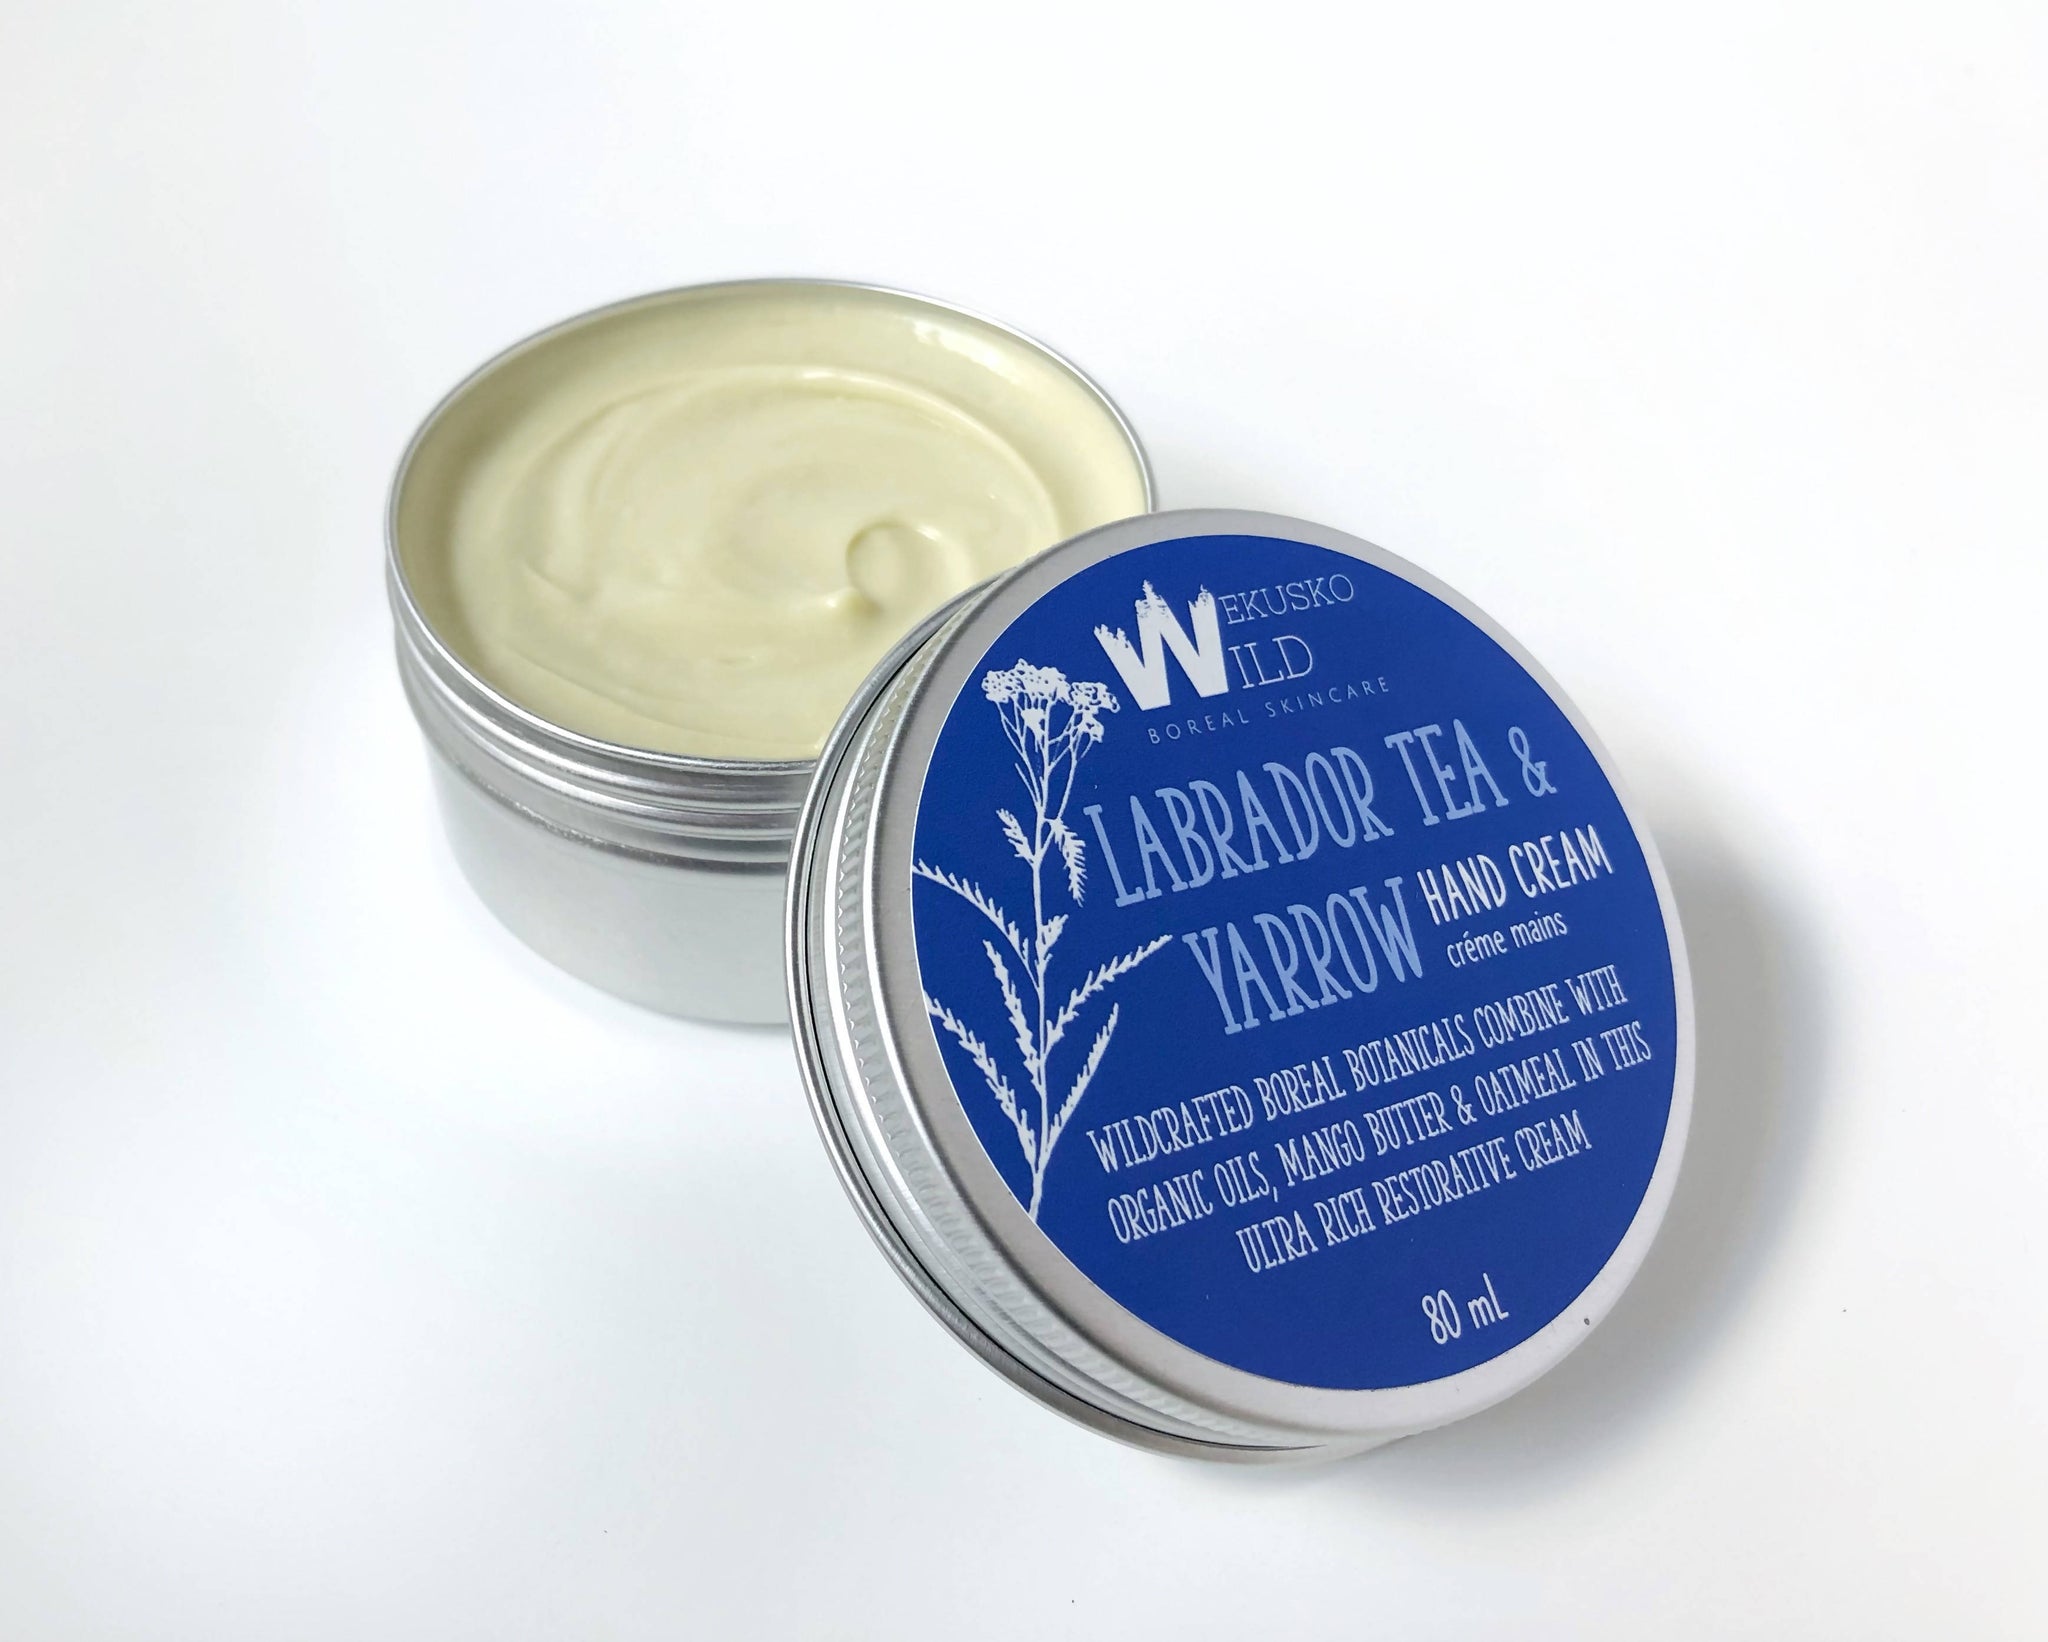 Labrador tea & yarrow hand cream - WEKUSKO WILD Boreal Skincare